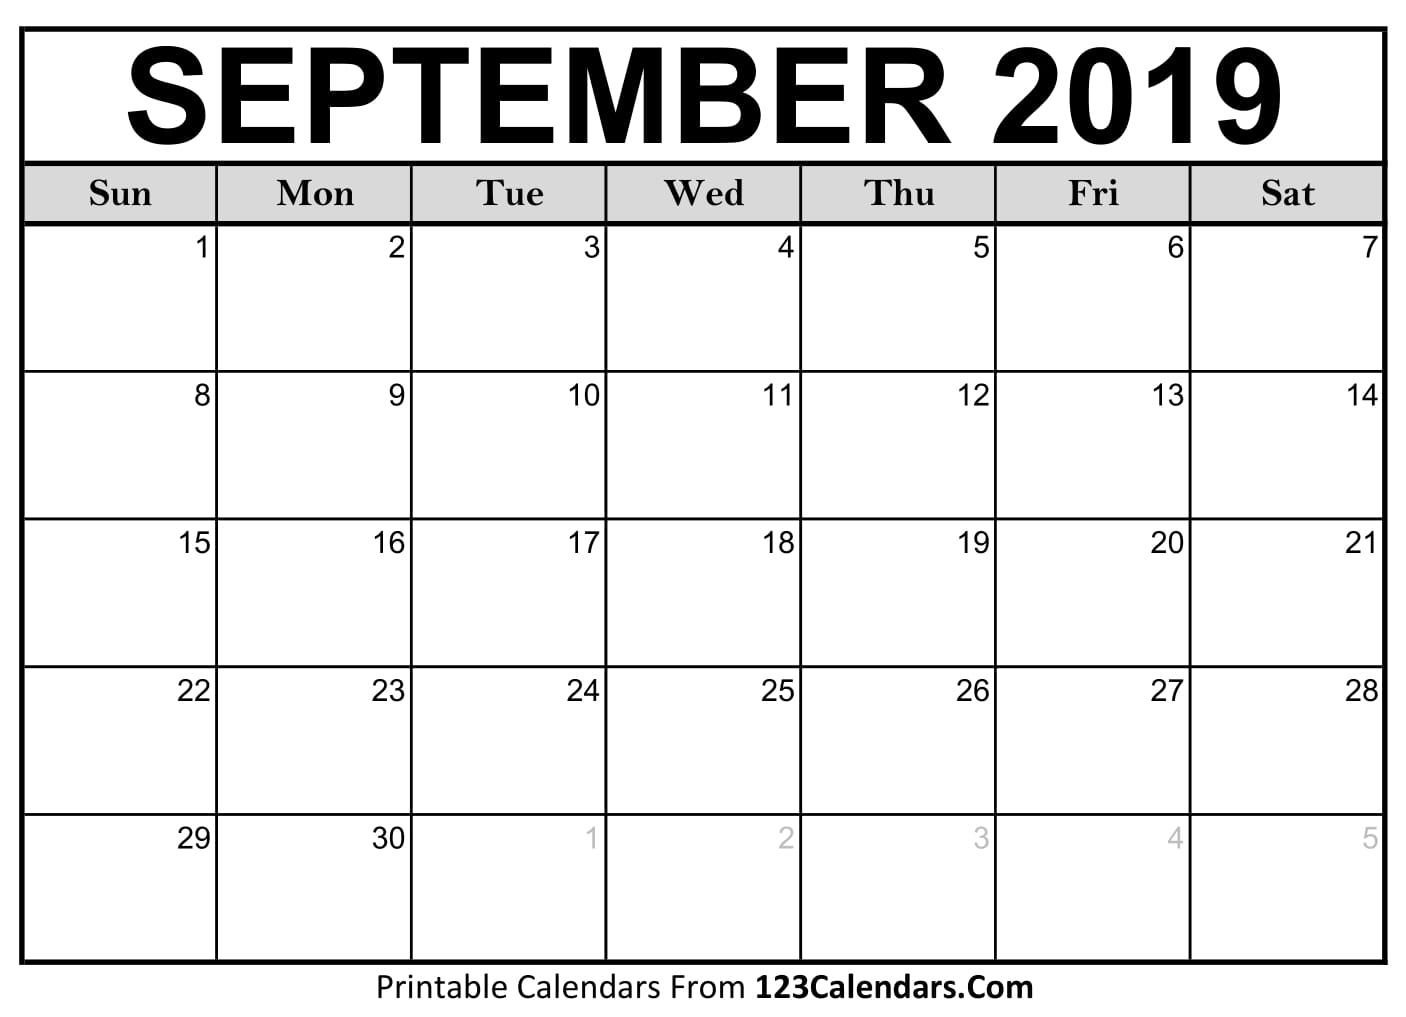 September 2019 Printable Calendar September 2019 Calendar Rzwuas